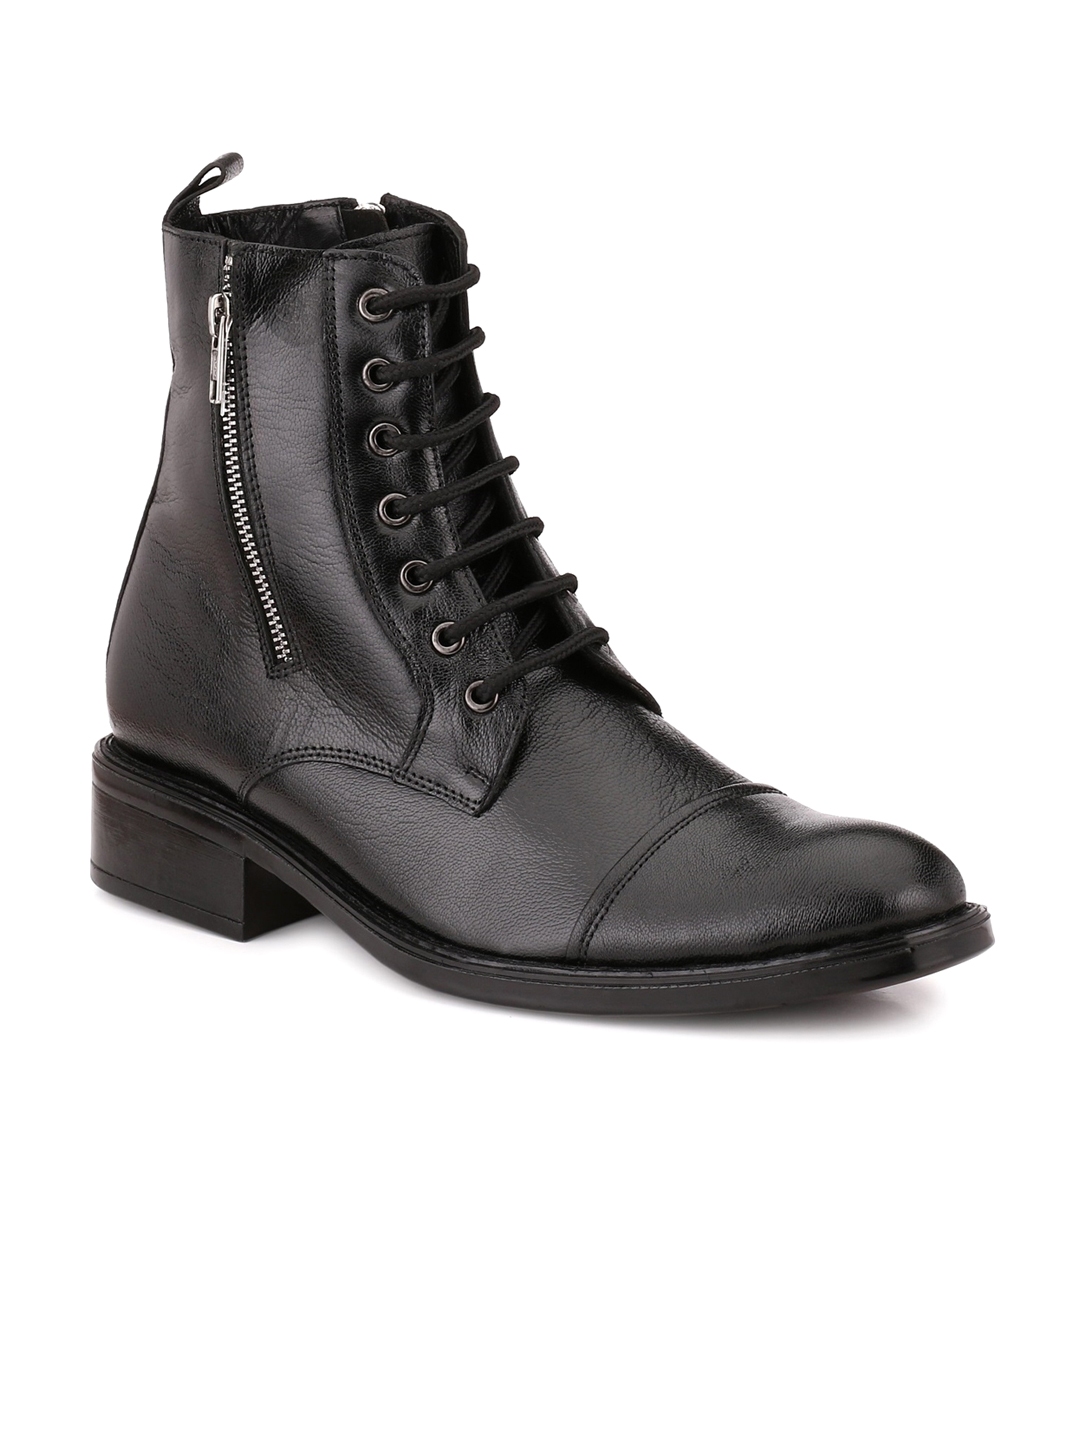 Buy Mactree Men Black Leather Boots 